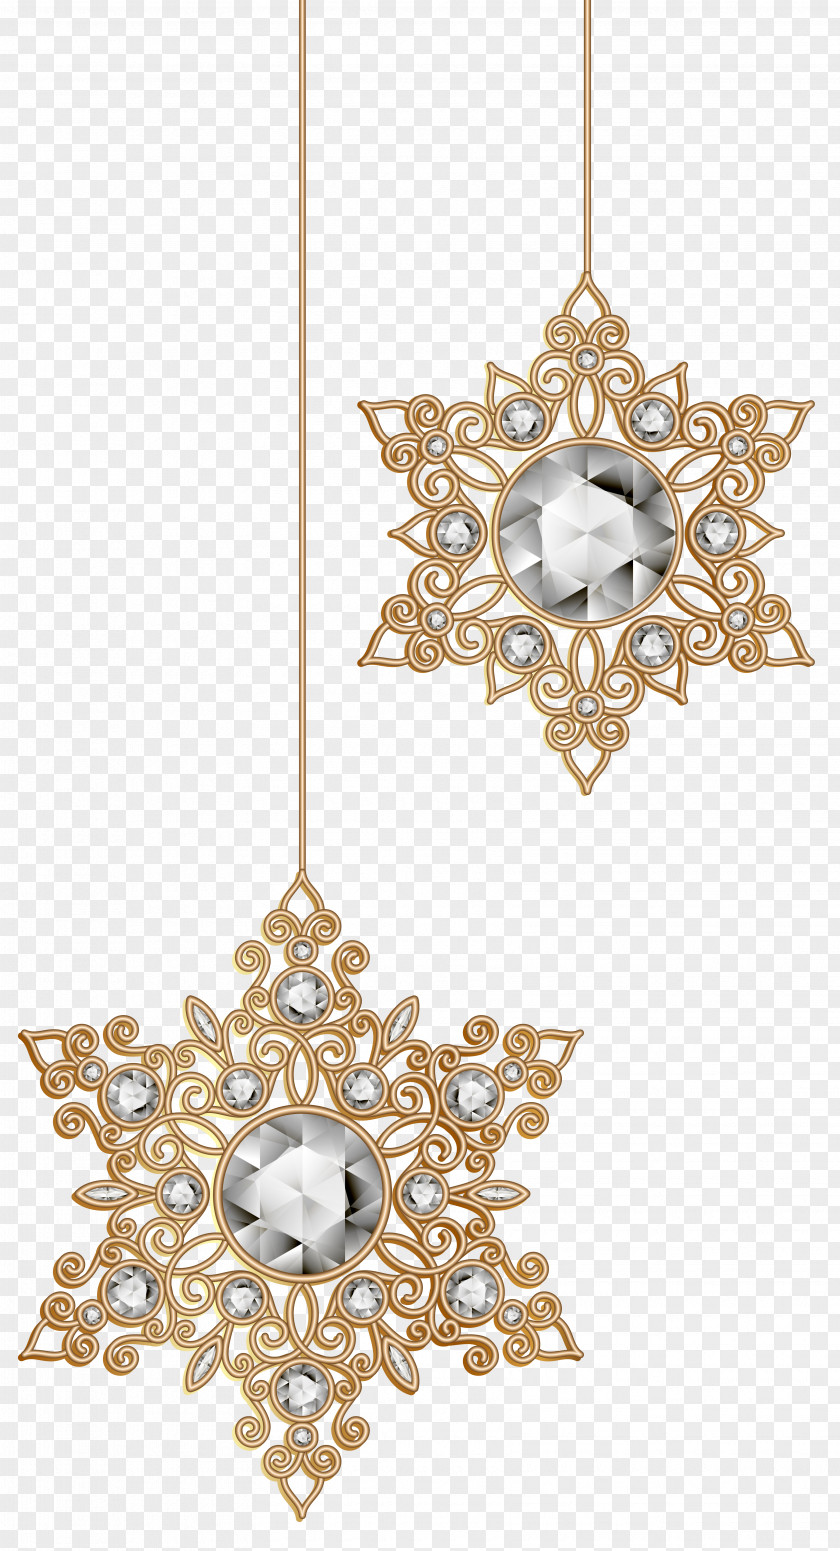 Christmas Snowflakes Ornaments Clip-Art Image Ornament Snowflake Clip Art PNG